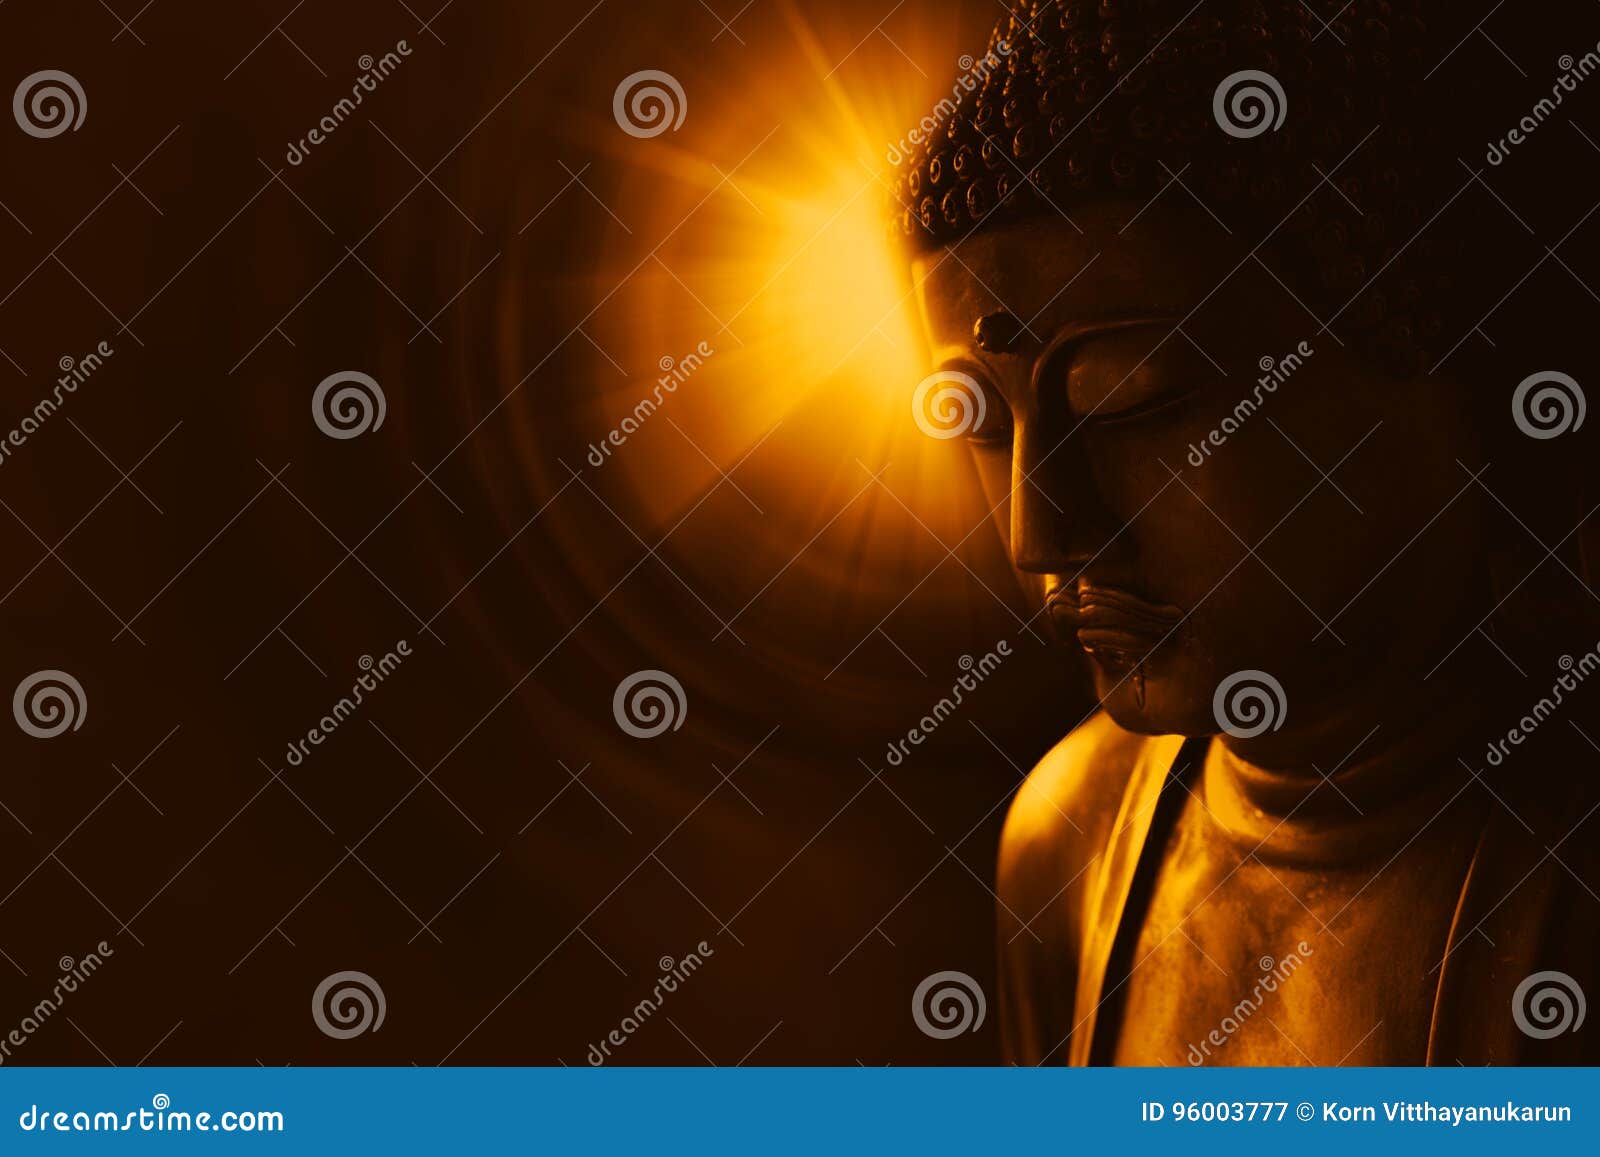 asian buddha with light of wisdom